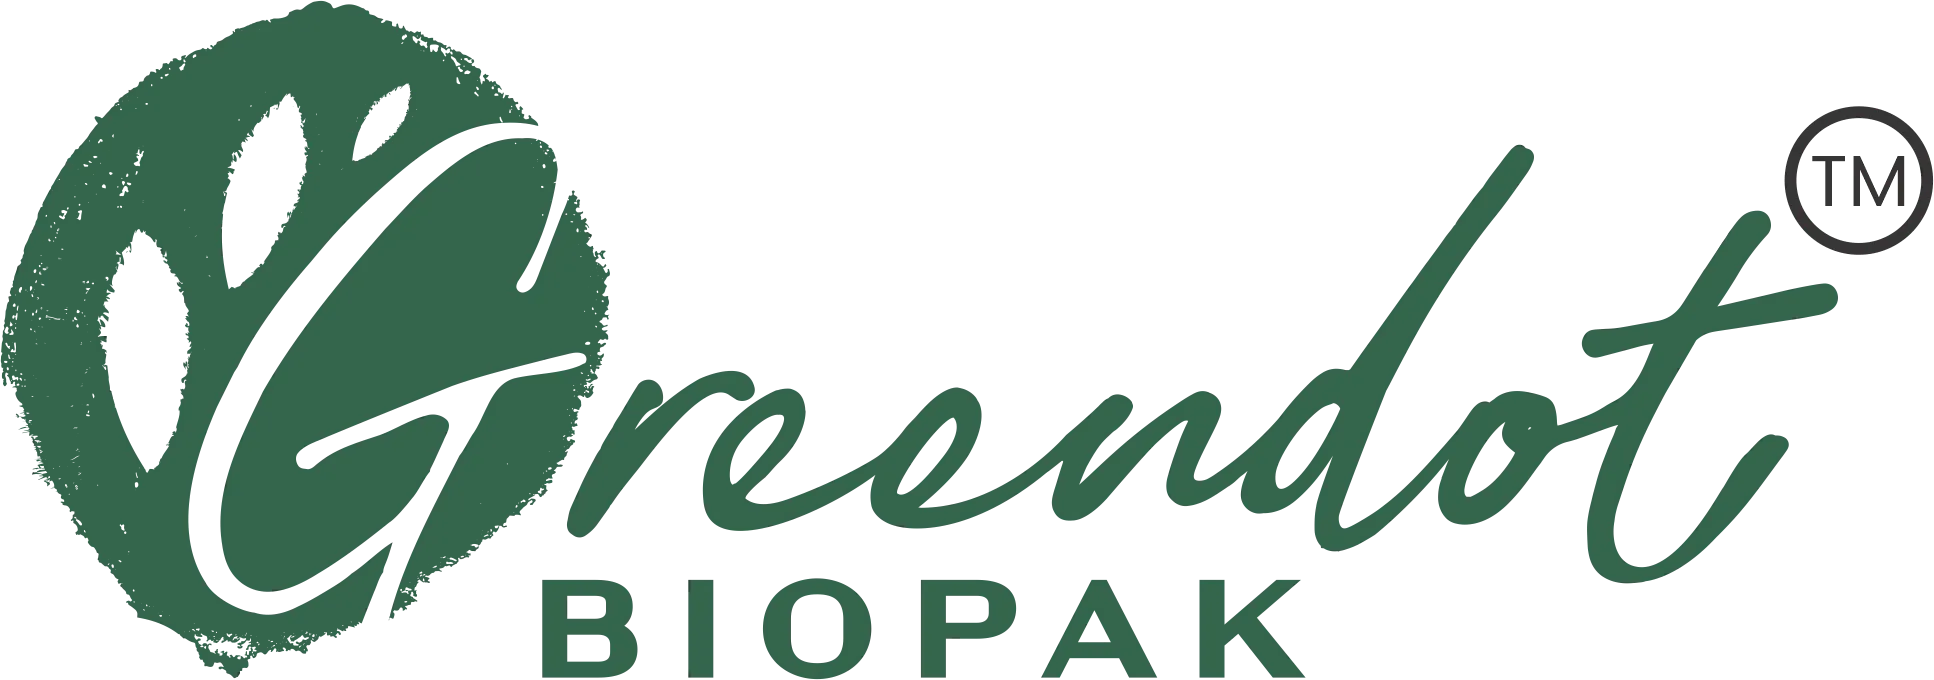 Greendot logo